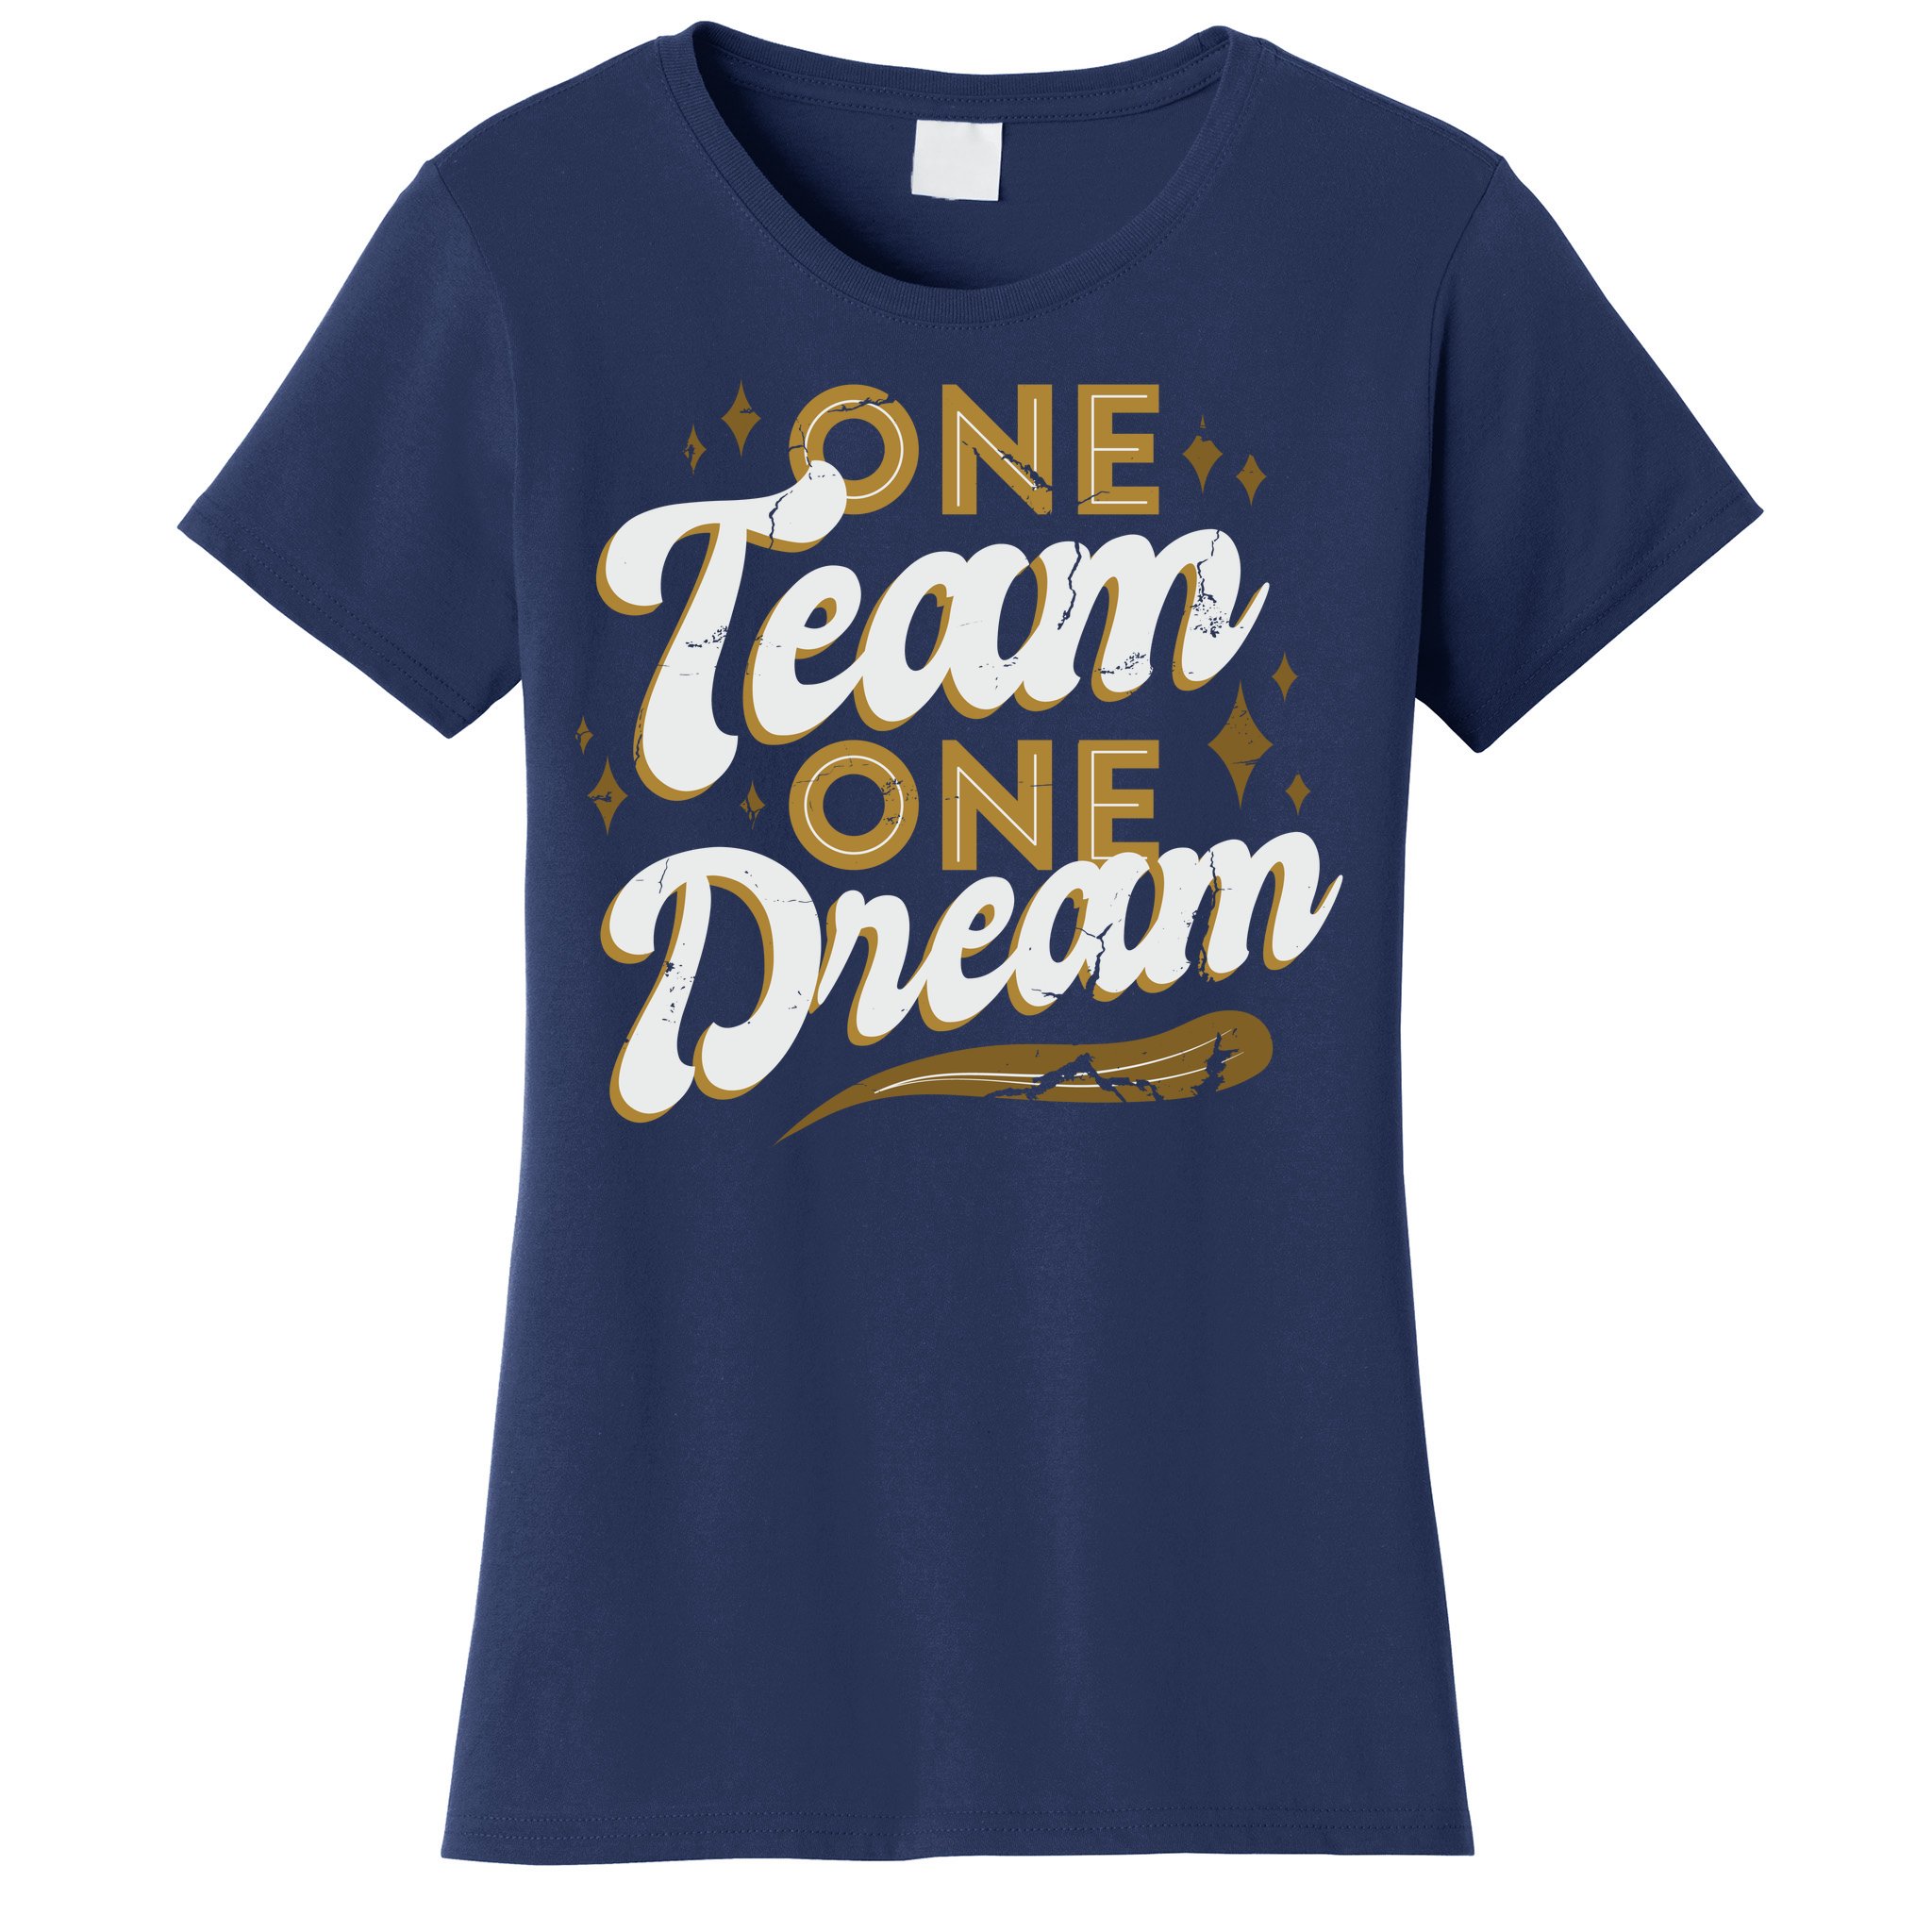 Dream Big Vintage T-Shirt Motivational Shirt Cool Tee Personalized Inspirational Shirt Comfy Tee Plus Size Shirts